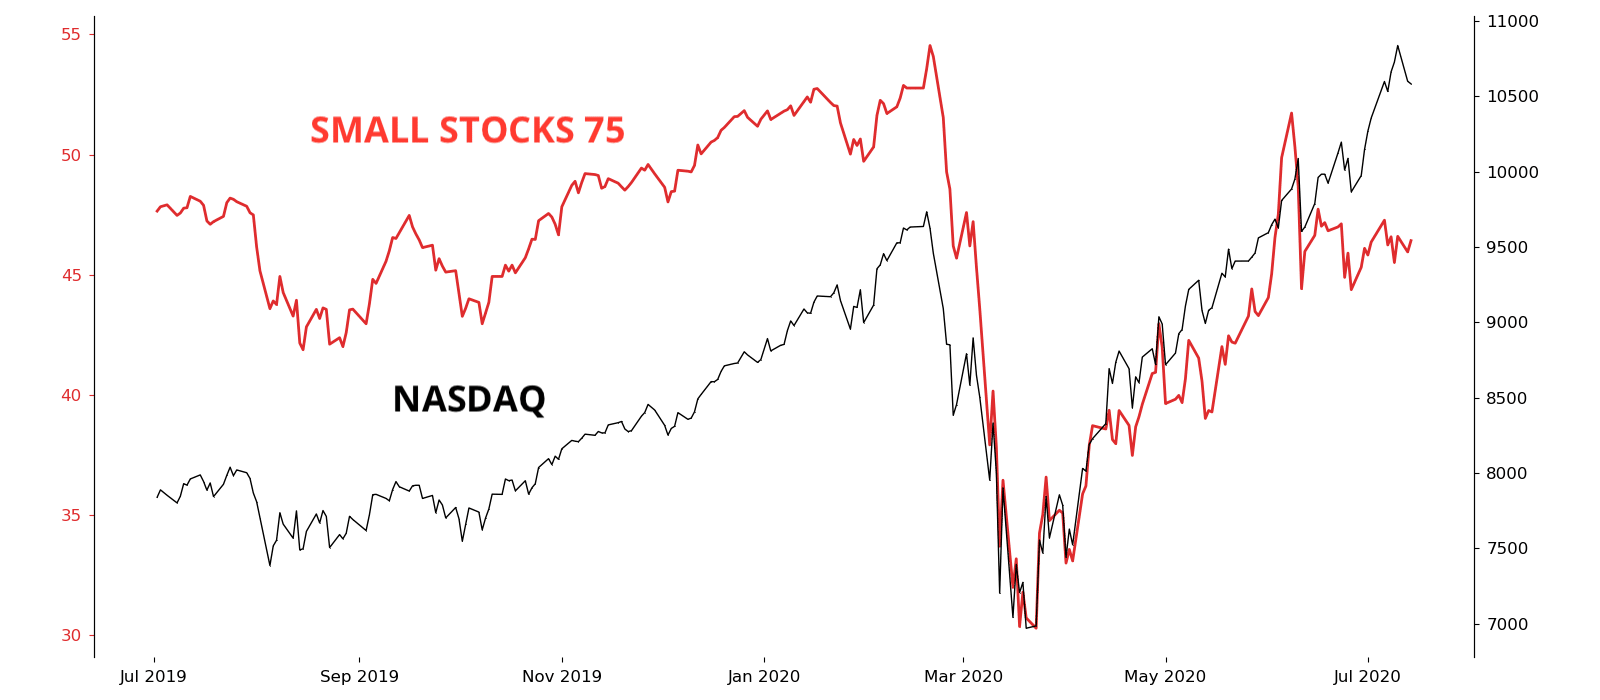 Small Stocks 75 vs. NASDAQ